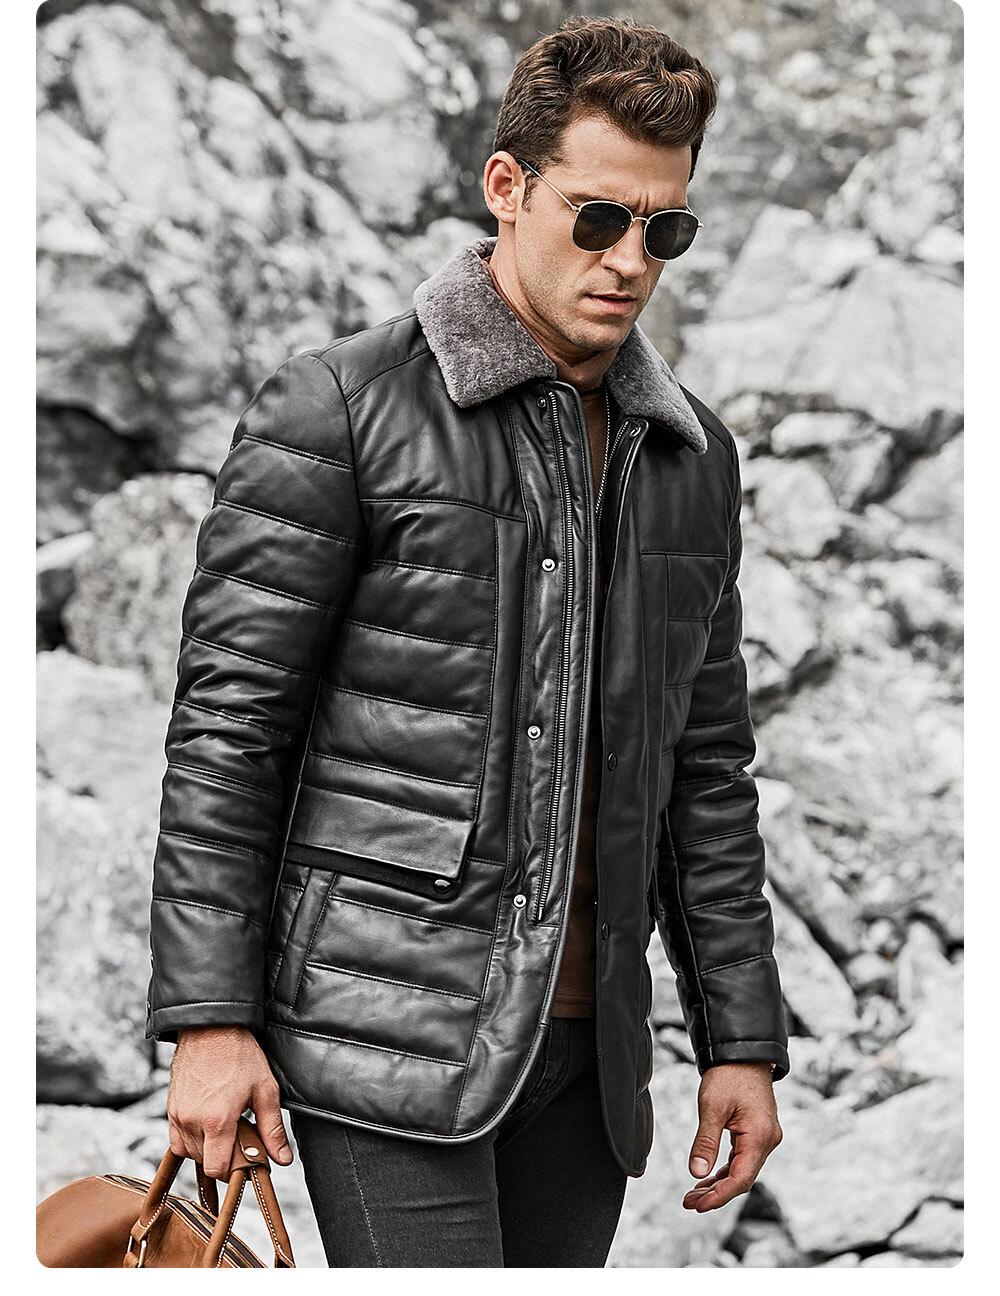 Men's Lambskin Leather Down Jacket Puffer Coat Fur Collar 187 Buy discount lambskin removable fur collar down jacket| newest lambskin removable fur collar down jacket